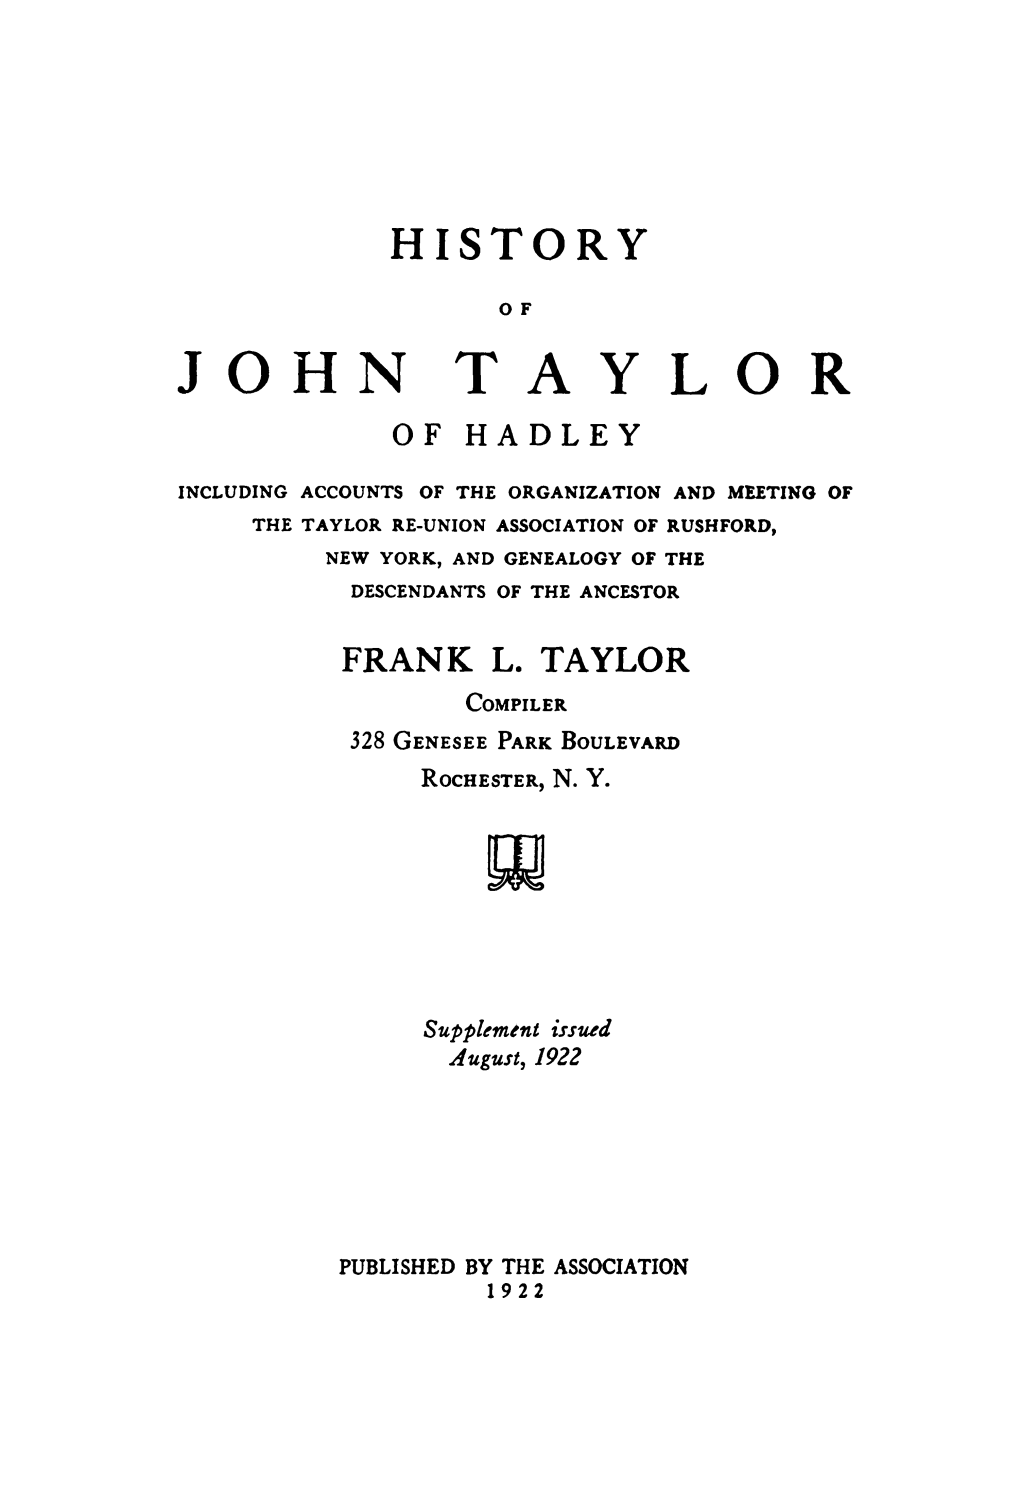 John Taylor of Hadley